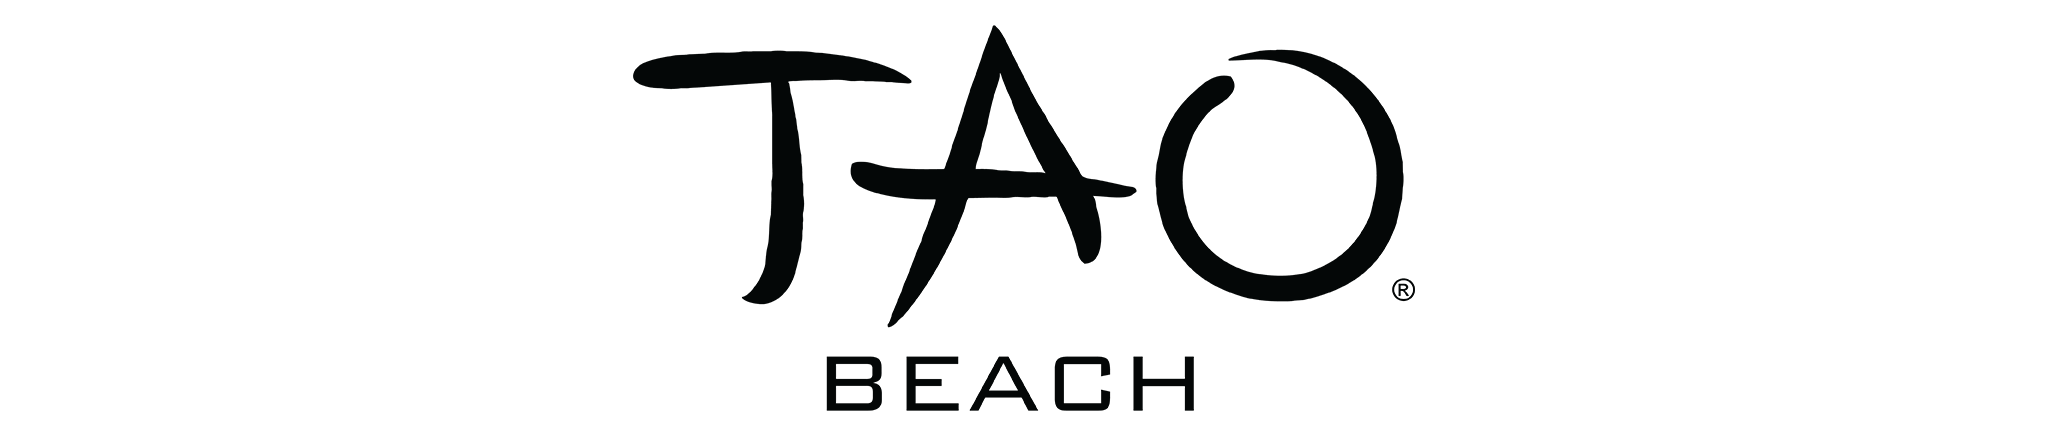 Tao Beach Logo